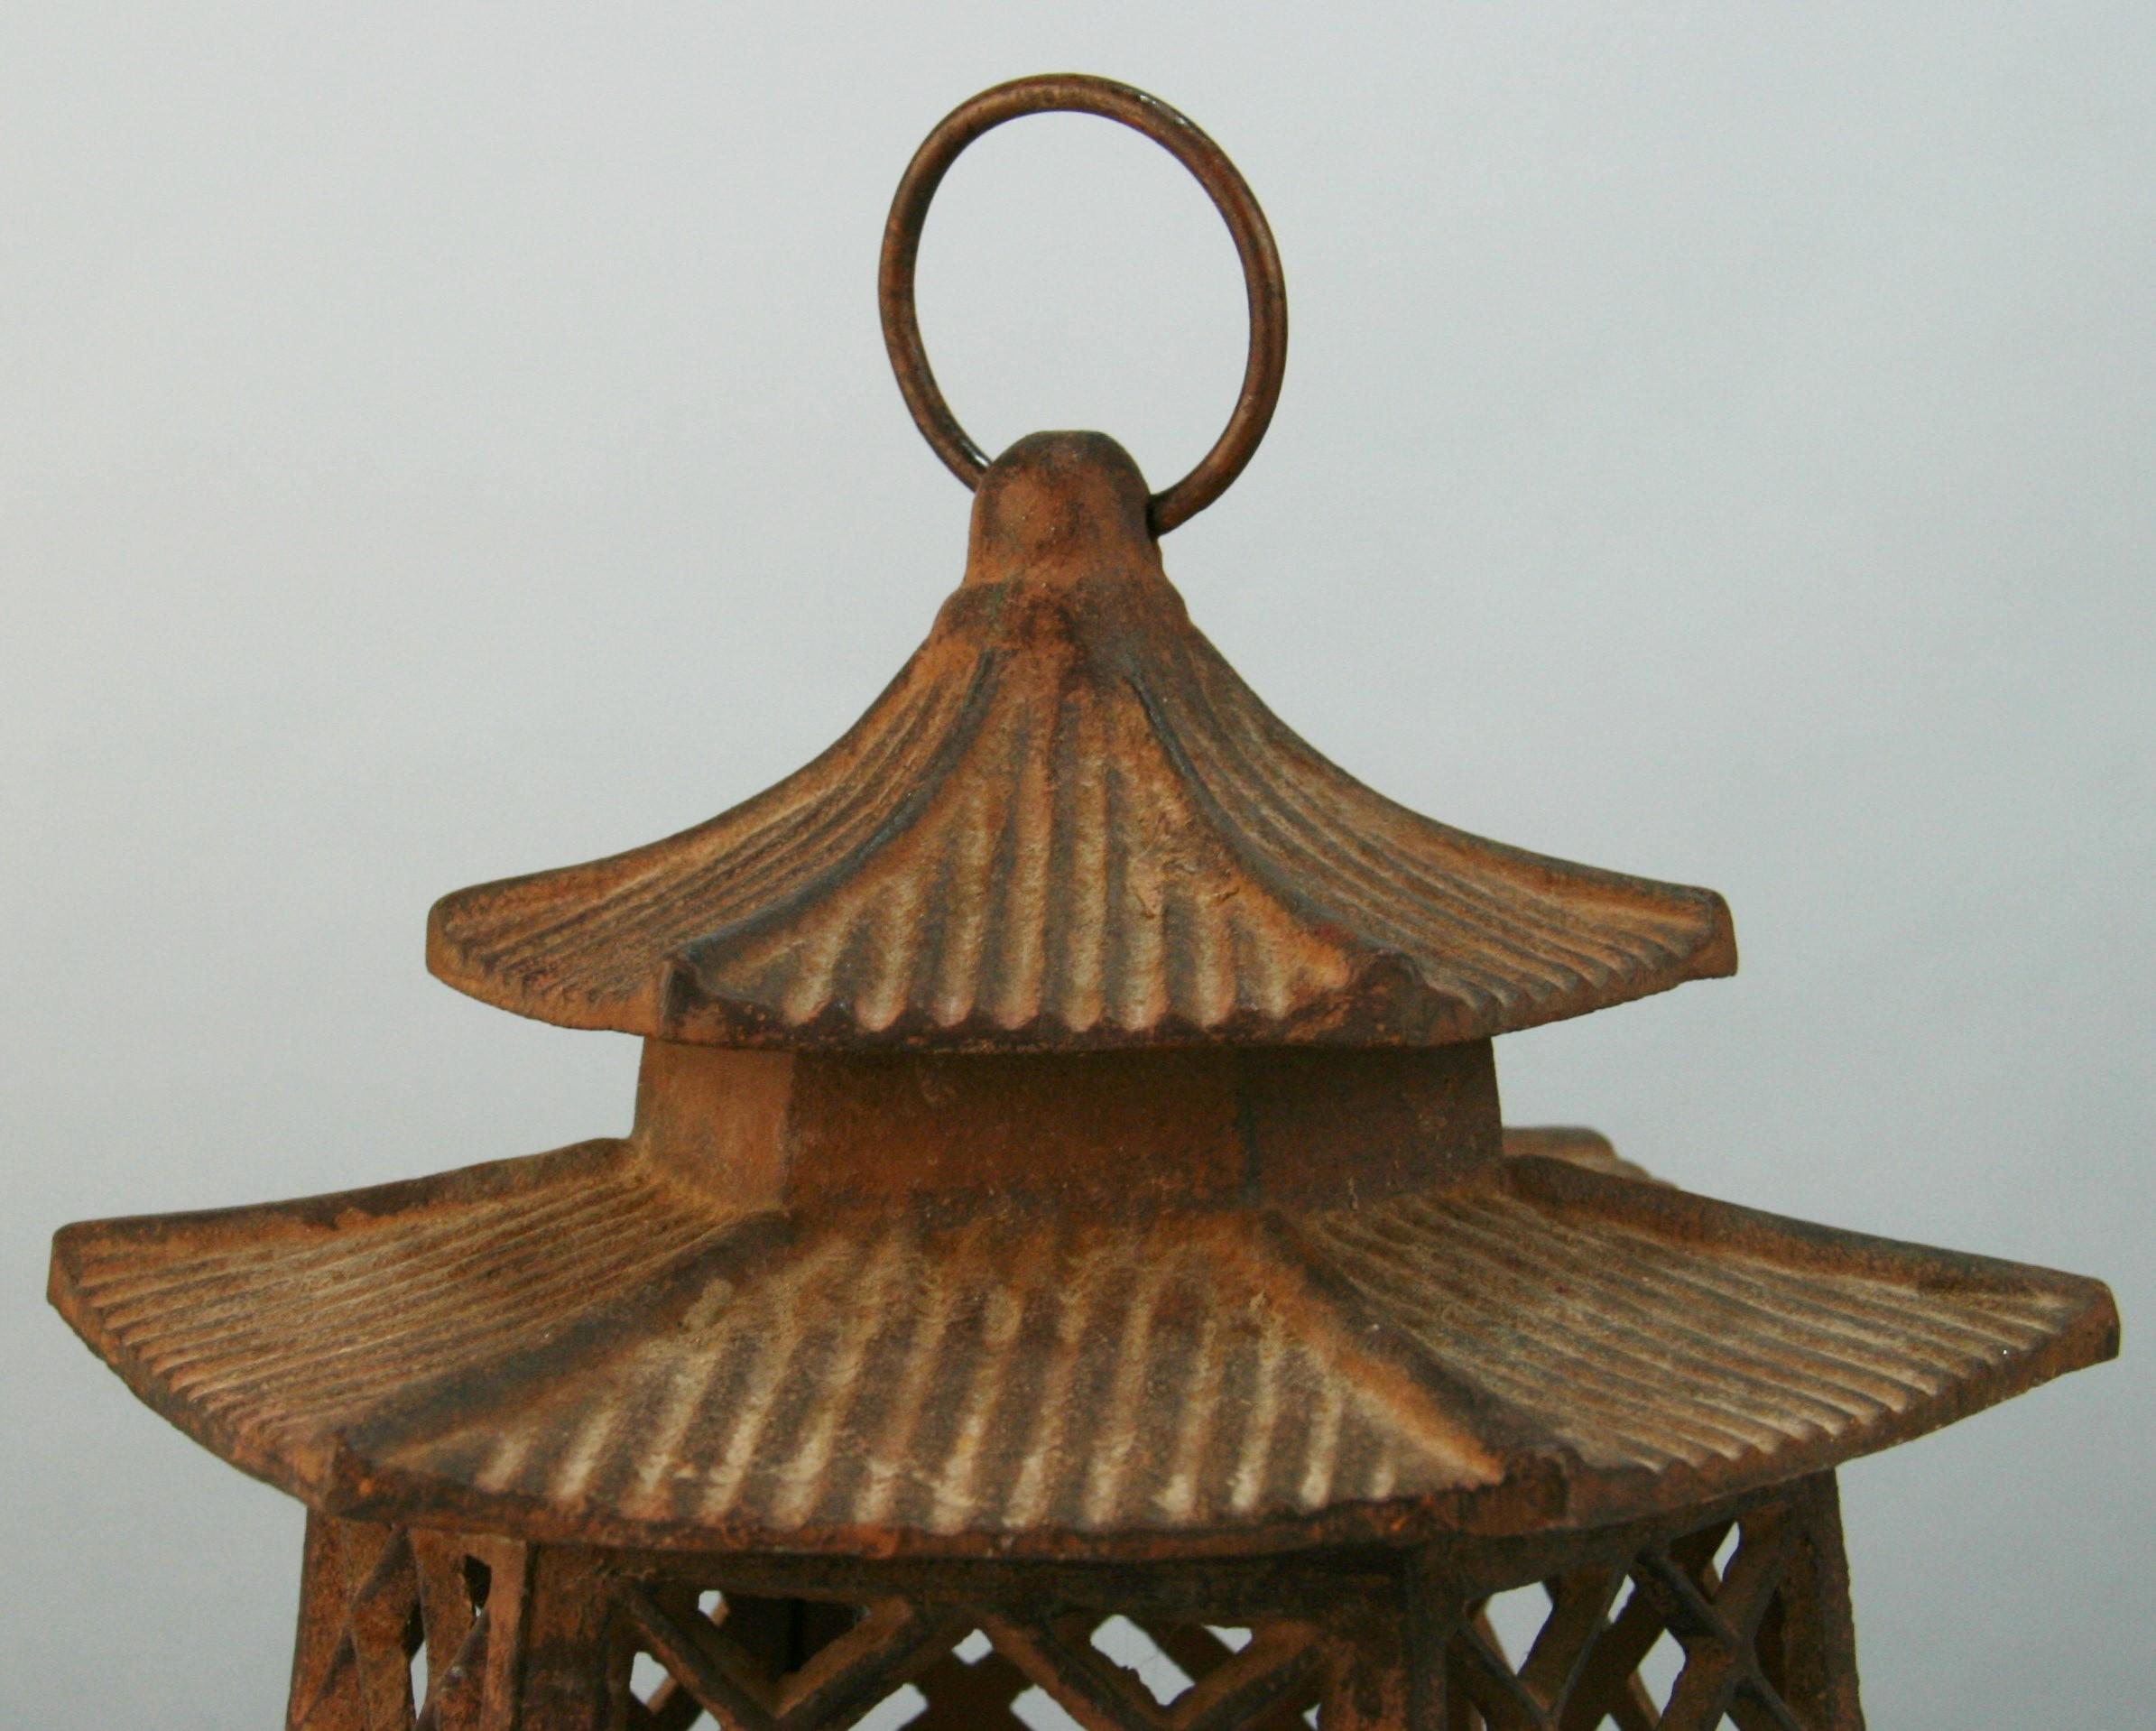 Hand-Crafted Japanese Double Pagoda Garden Lighting Lantern